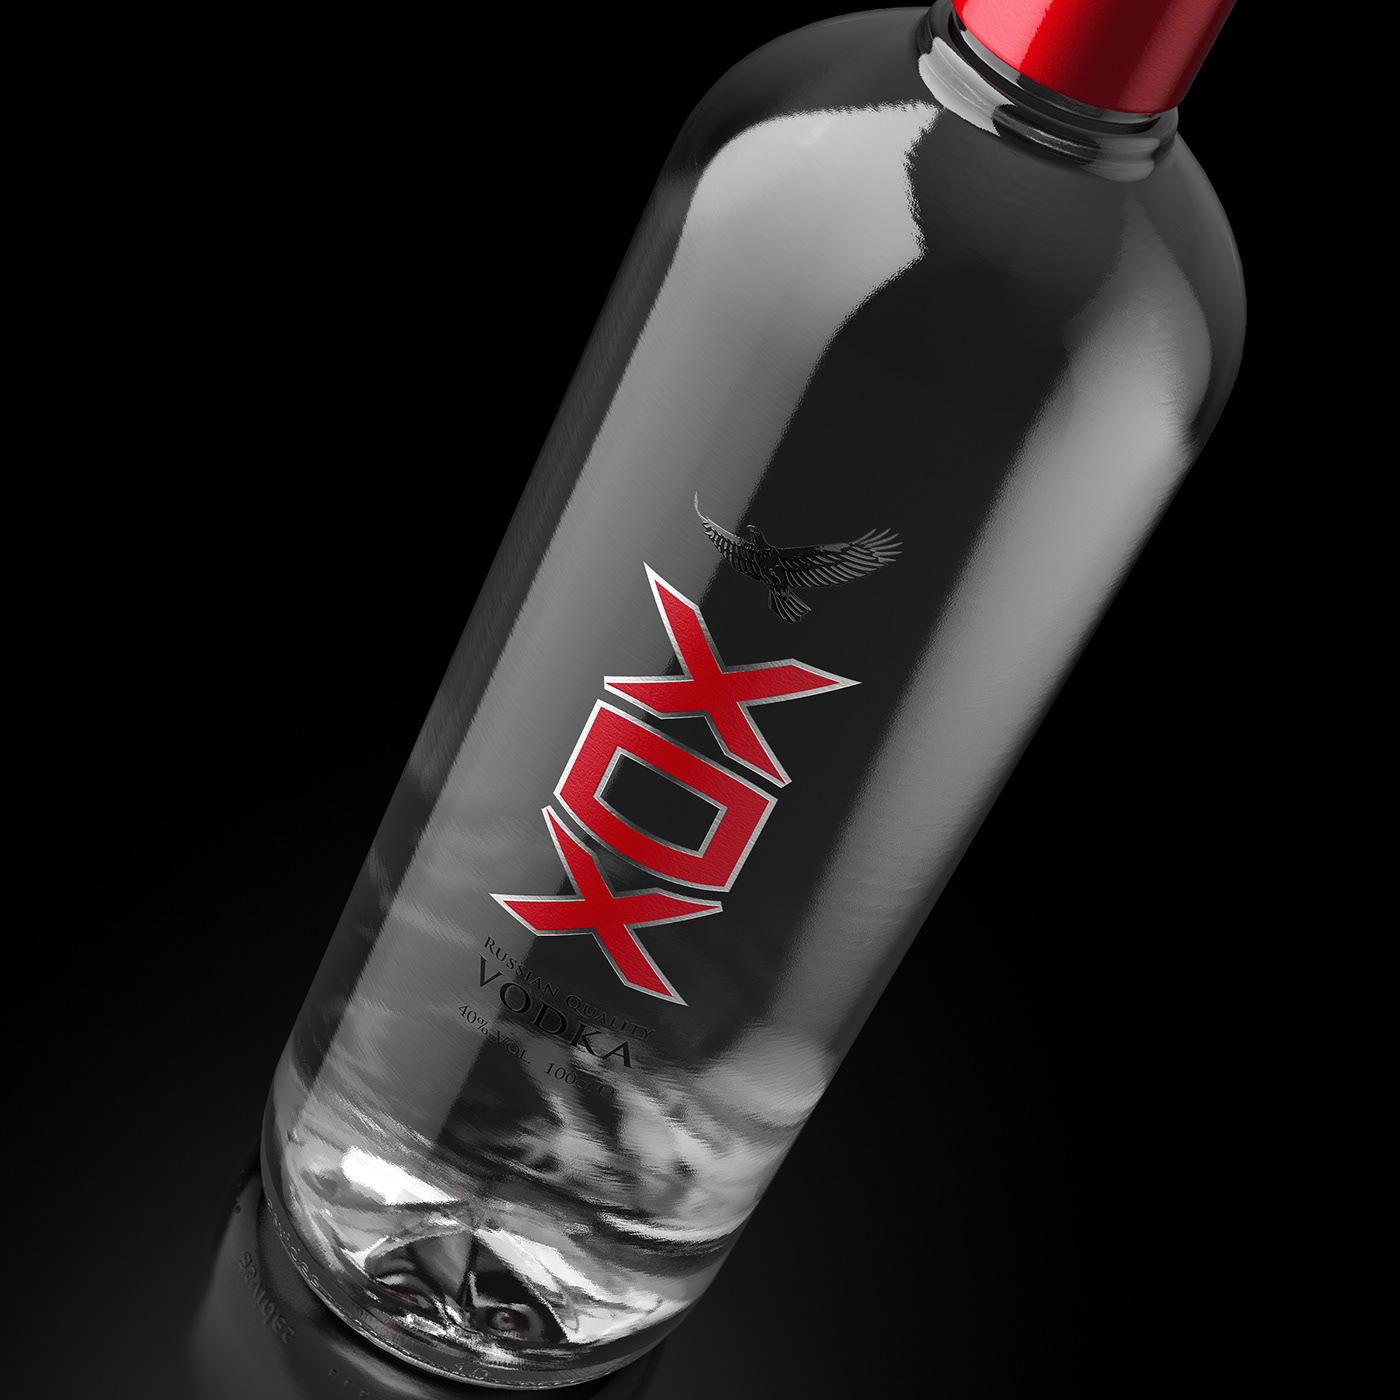 spirit vodka design alcohol Packaging drinks label design wine bottle packaging design product